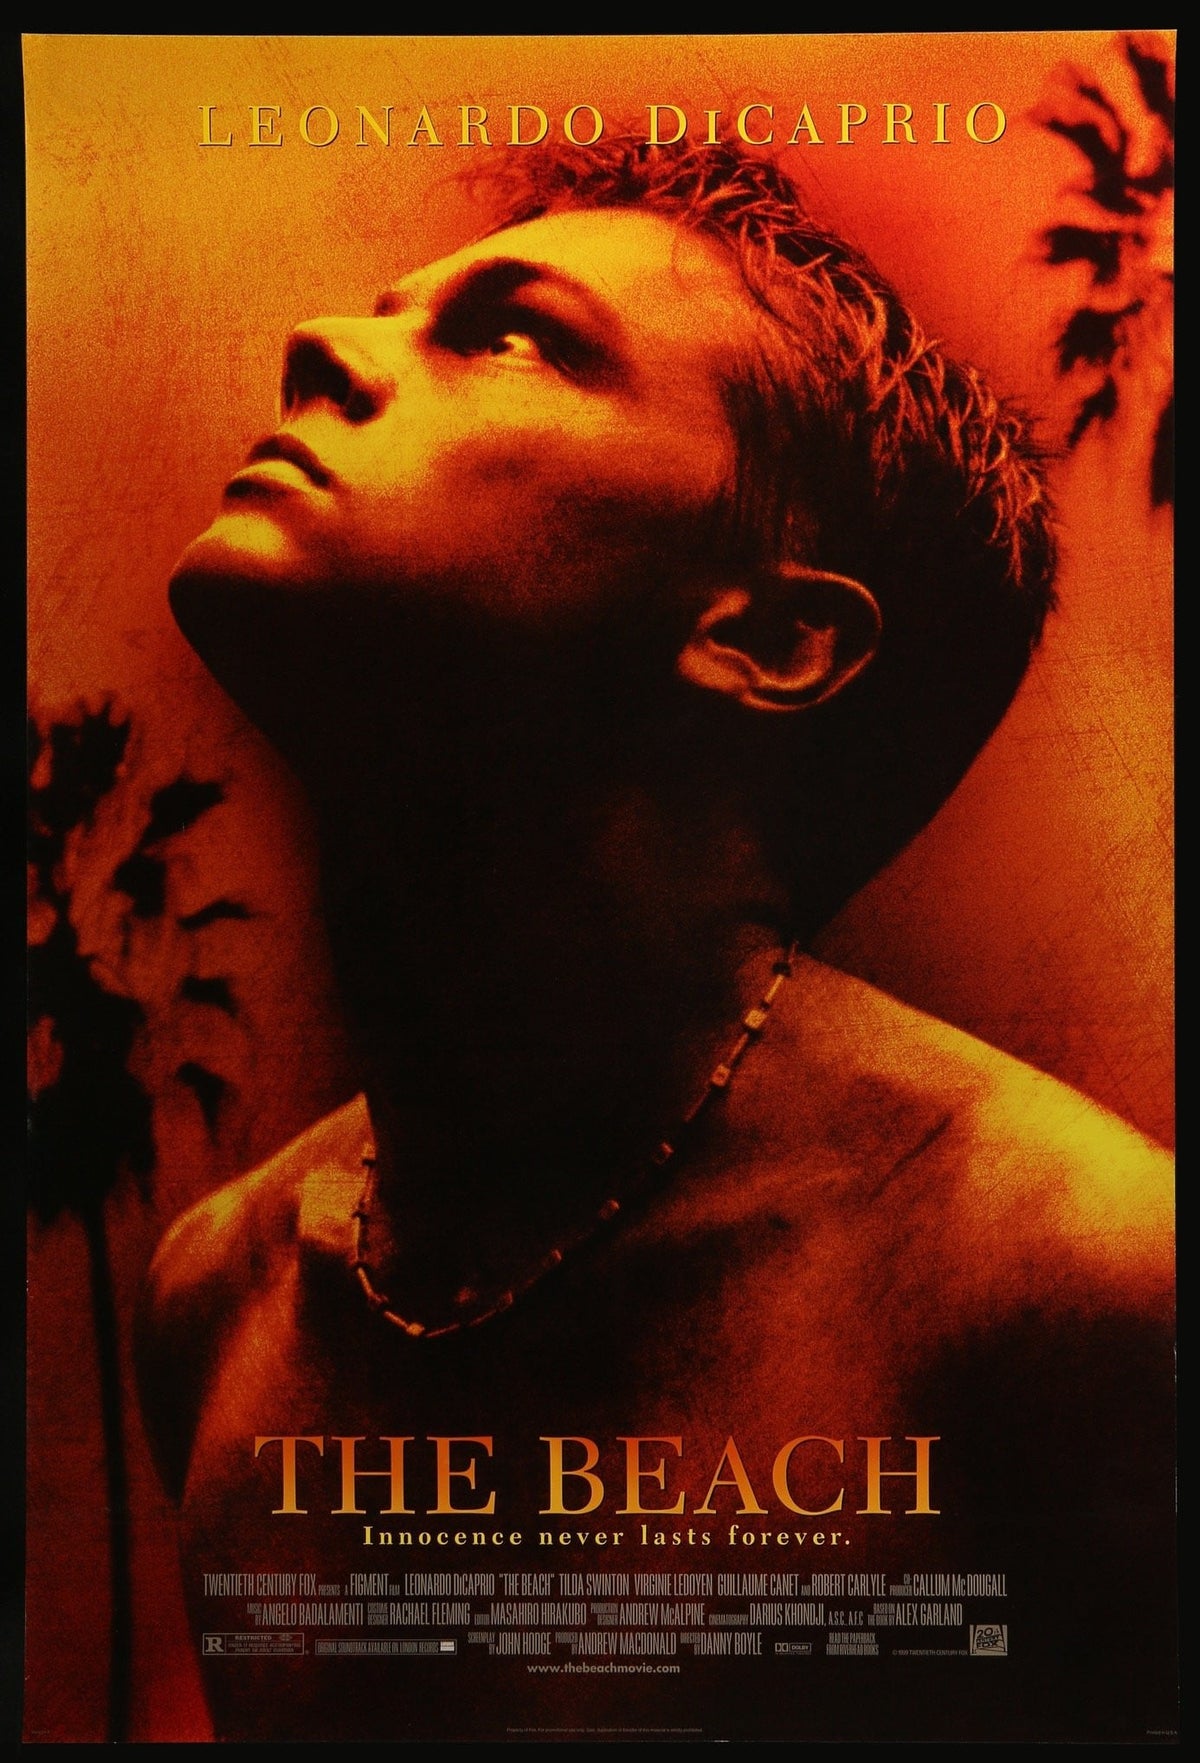 Beach (2000) original movie poster for sale at Original Film Art